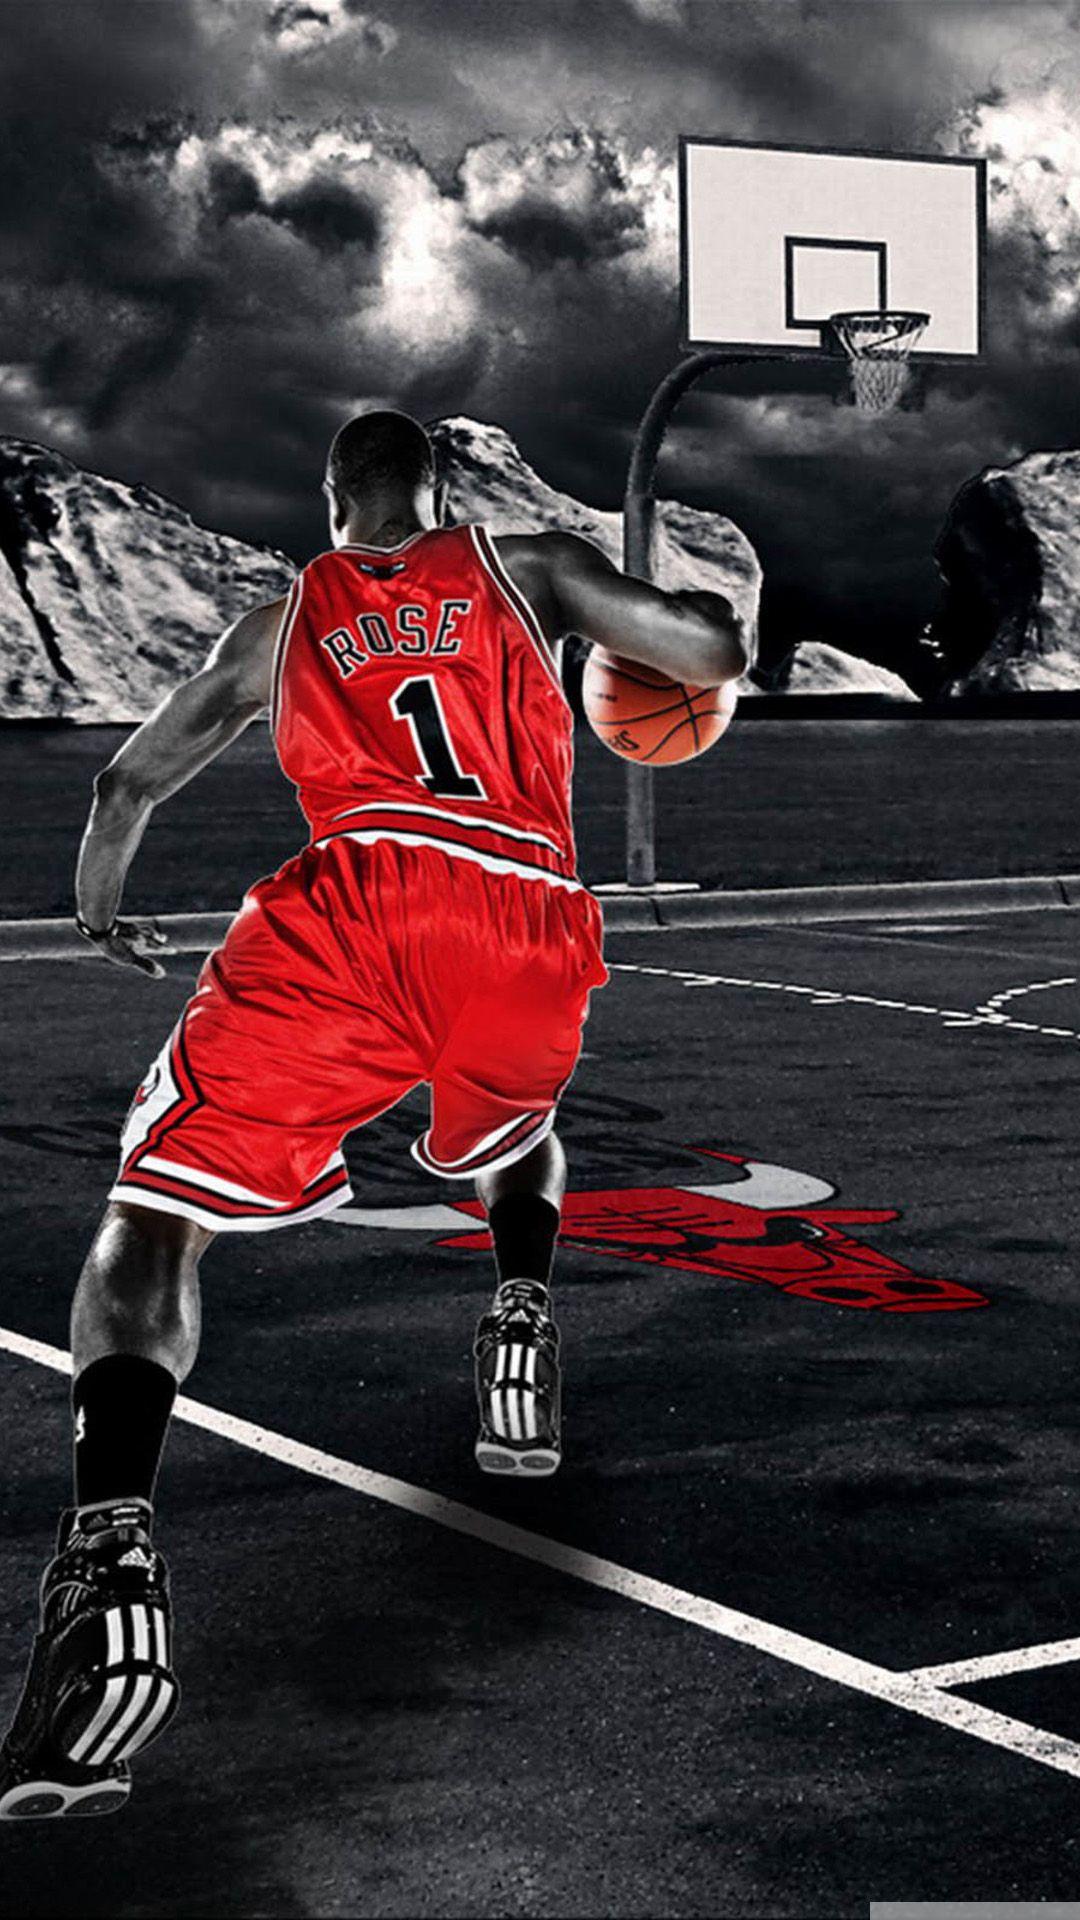 iphone-6-art-sport-basketball-iphone-6-plus-1080x1920-wallpaper.jpg